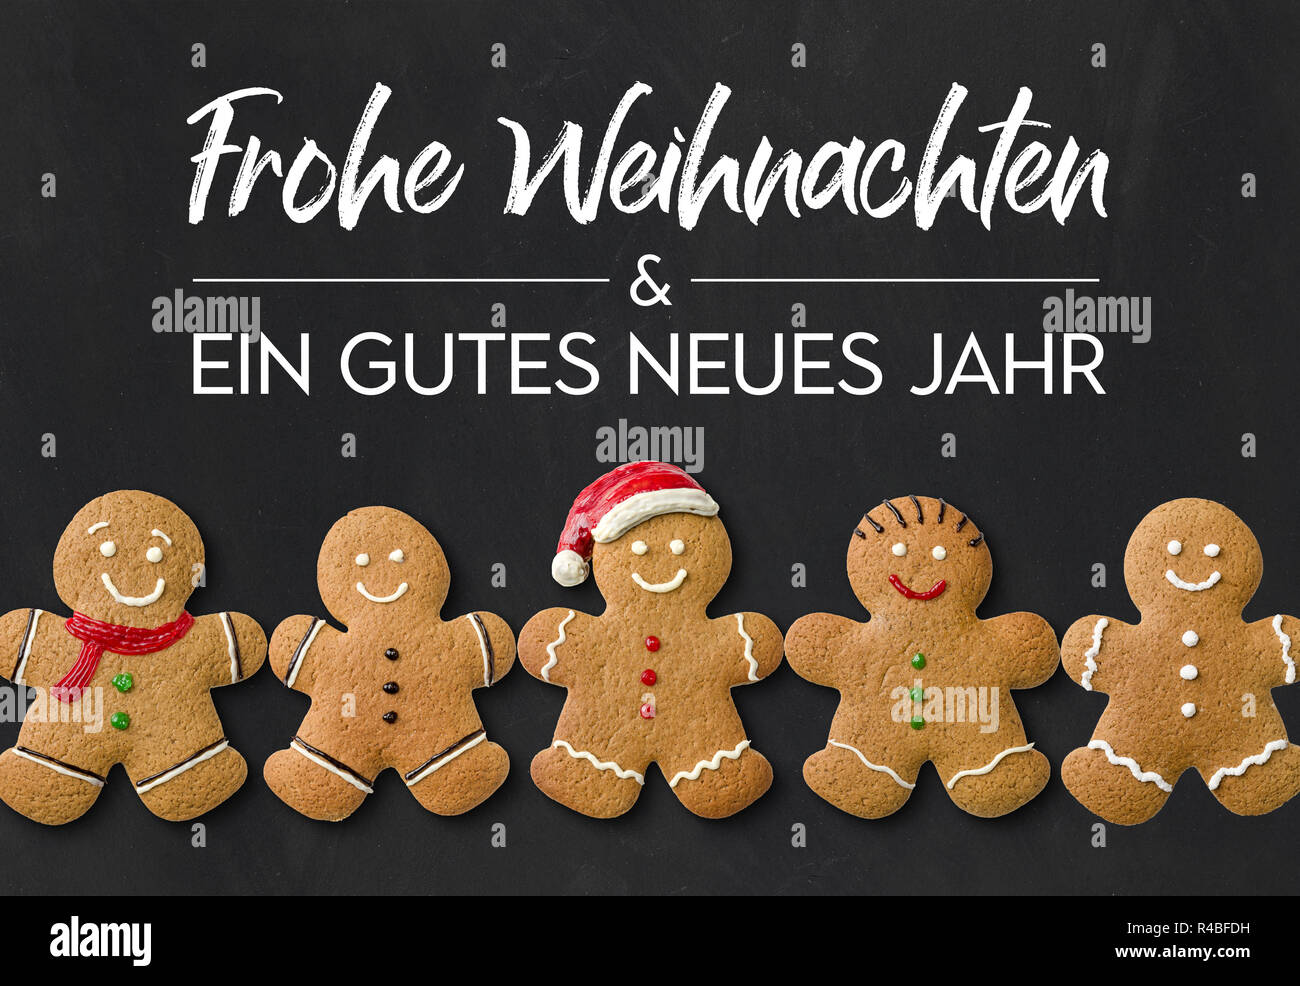 Frohe Weihnachten und ein gutes Neues Jahr (Feliz Navidad y un feliz año nuevo). Foto de stock